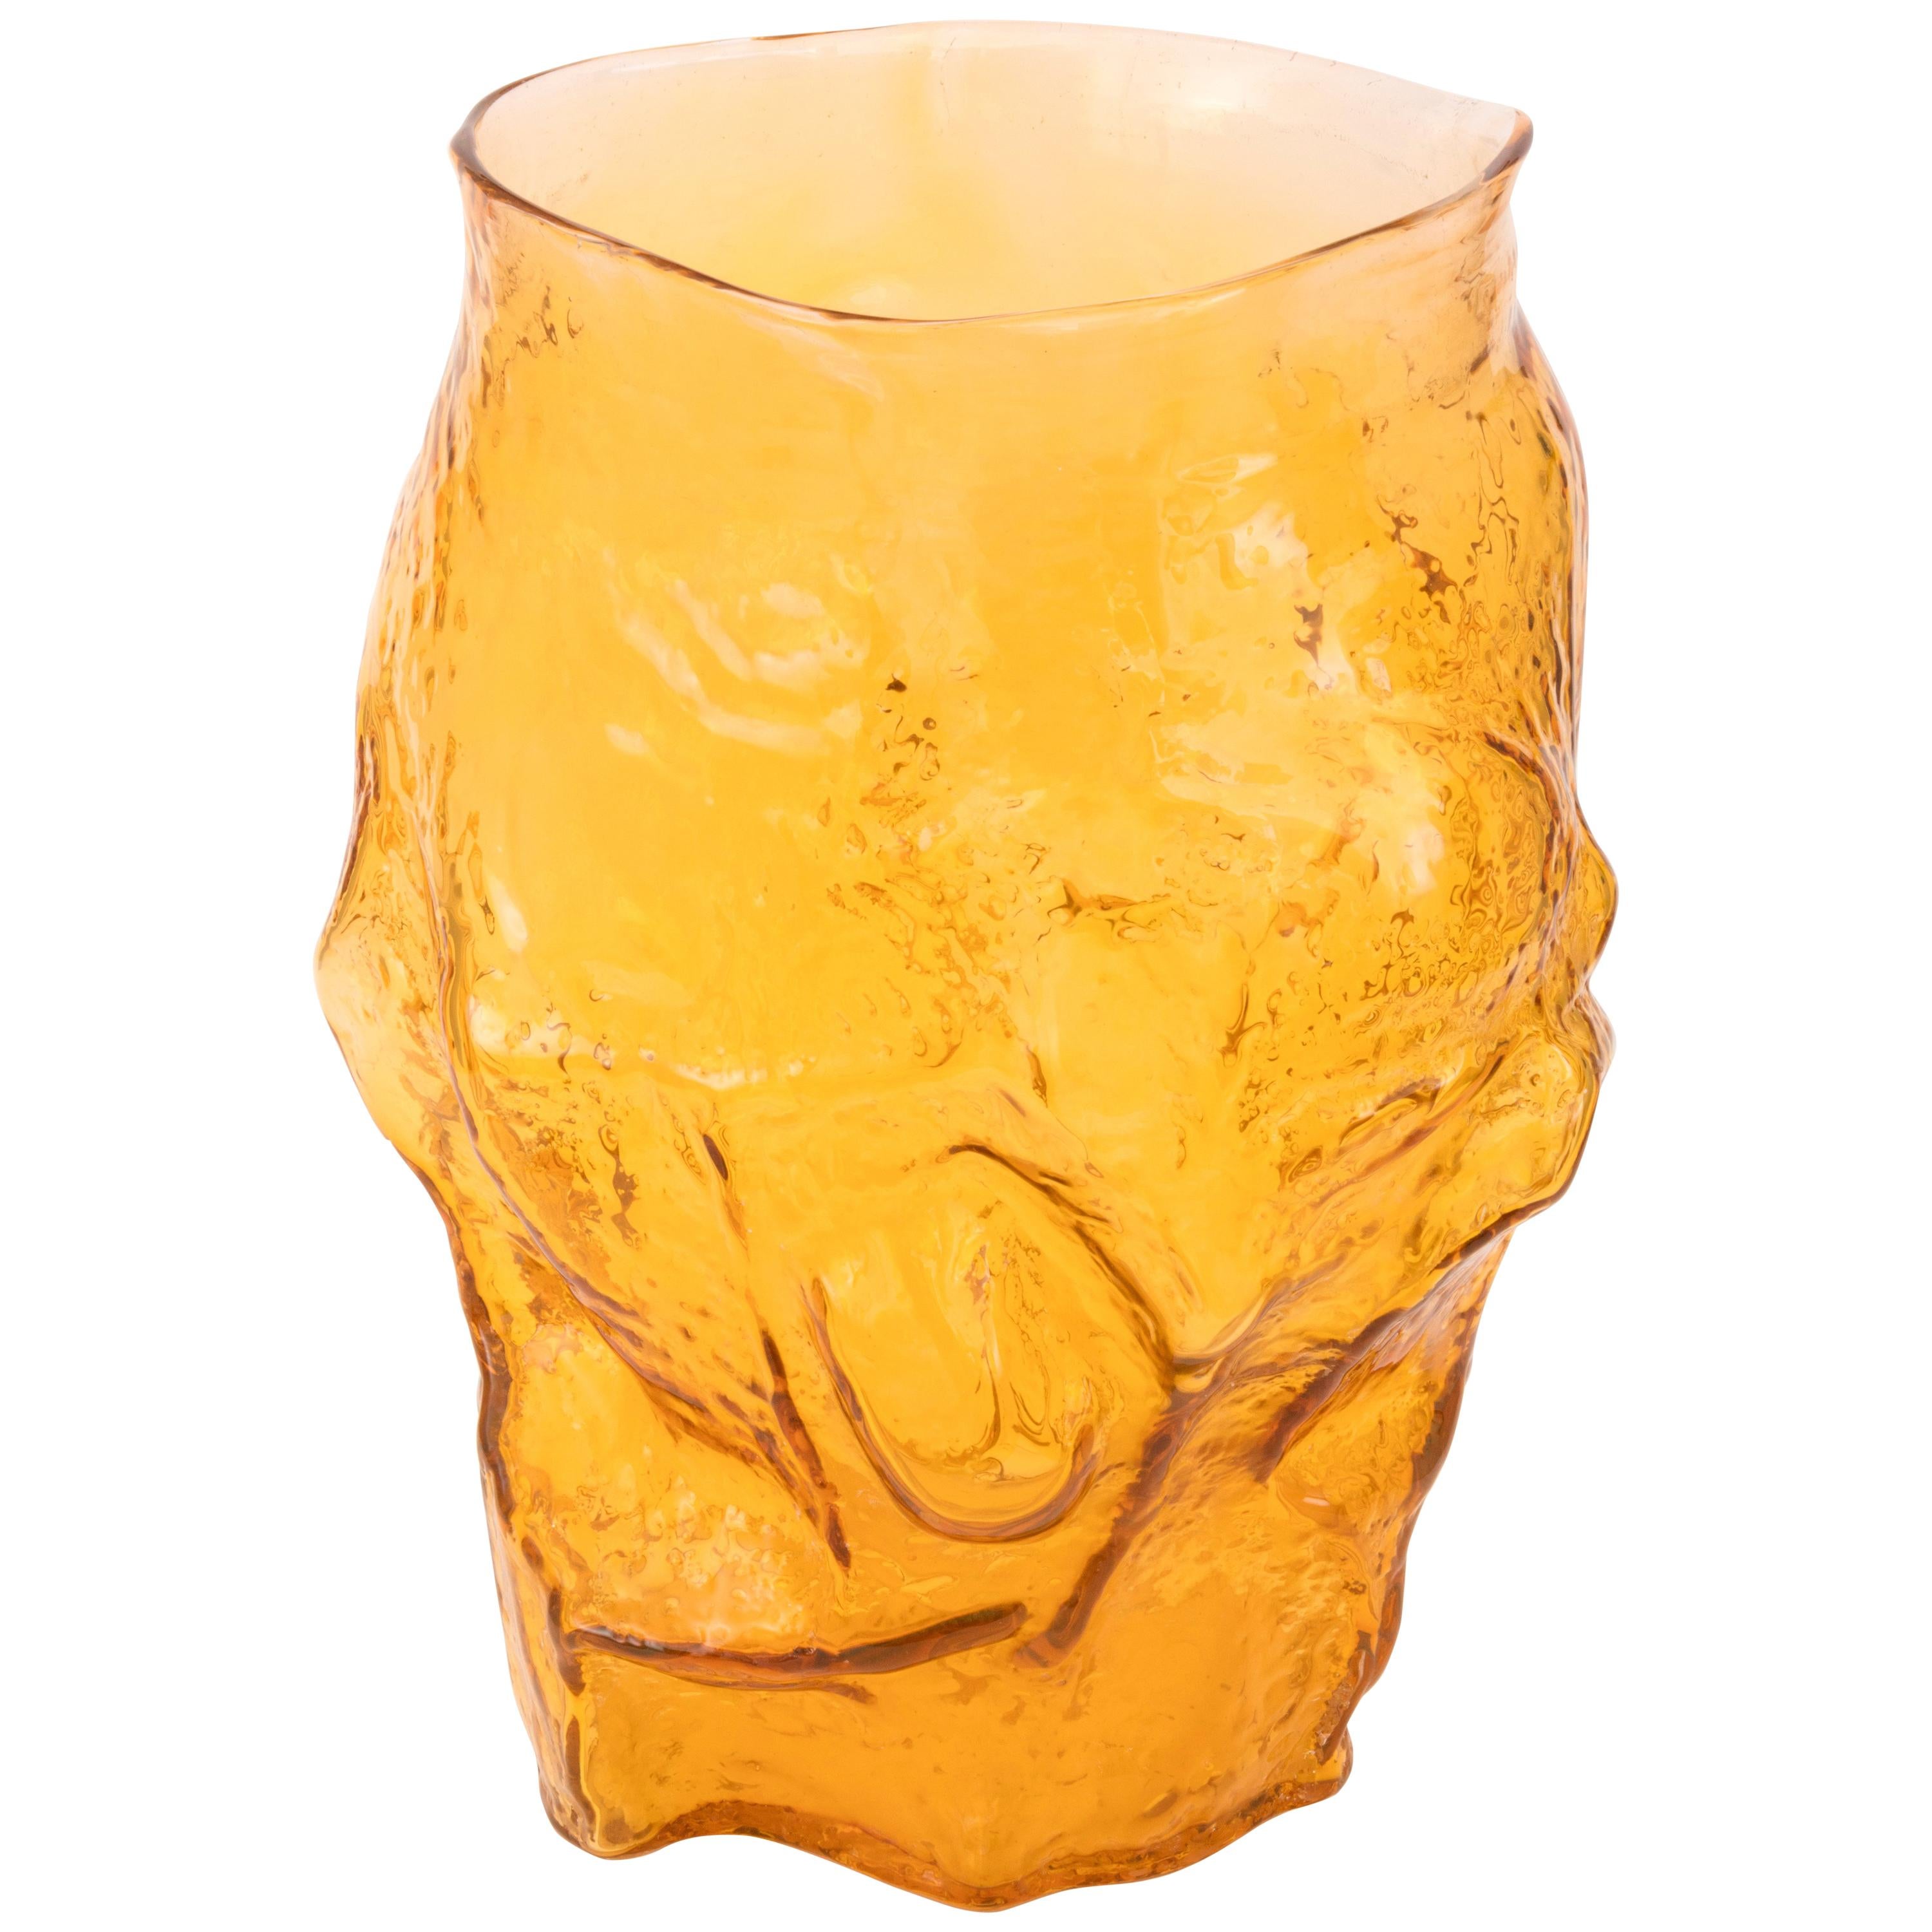 Contemporary Design Unique Glass 'Mountain' Vase by Fos, Butterscotch